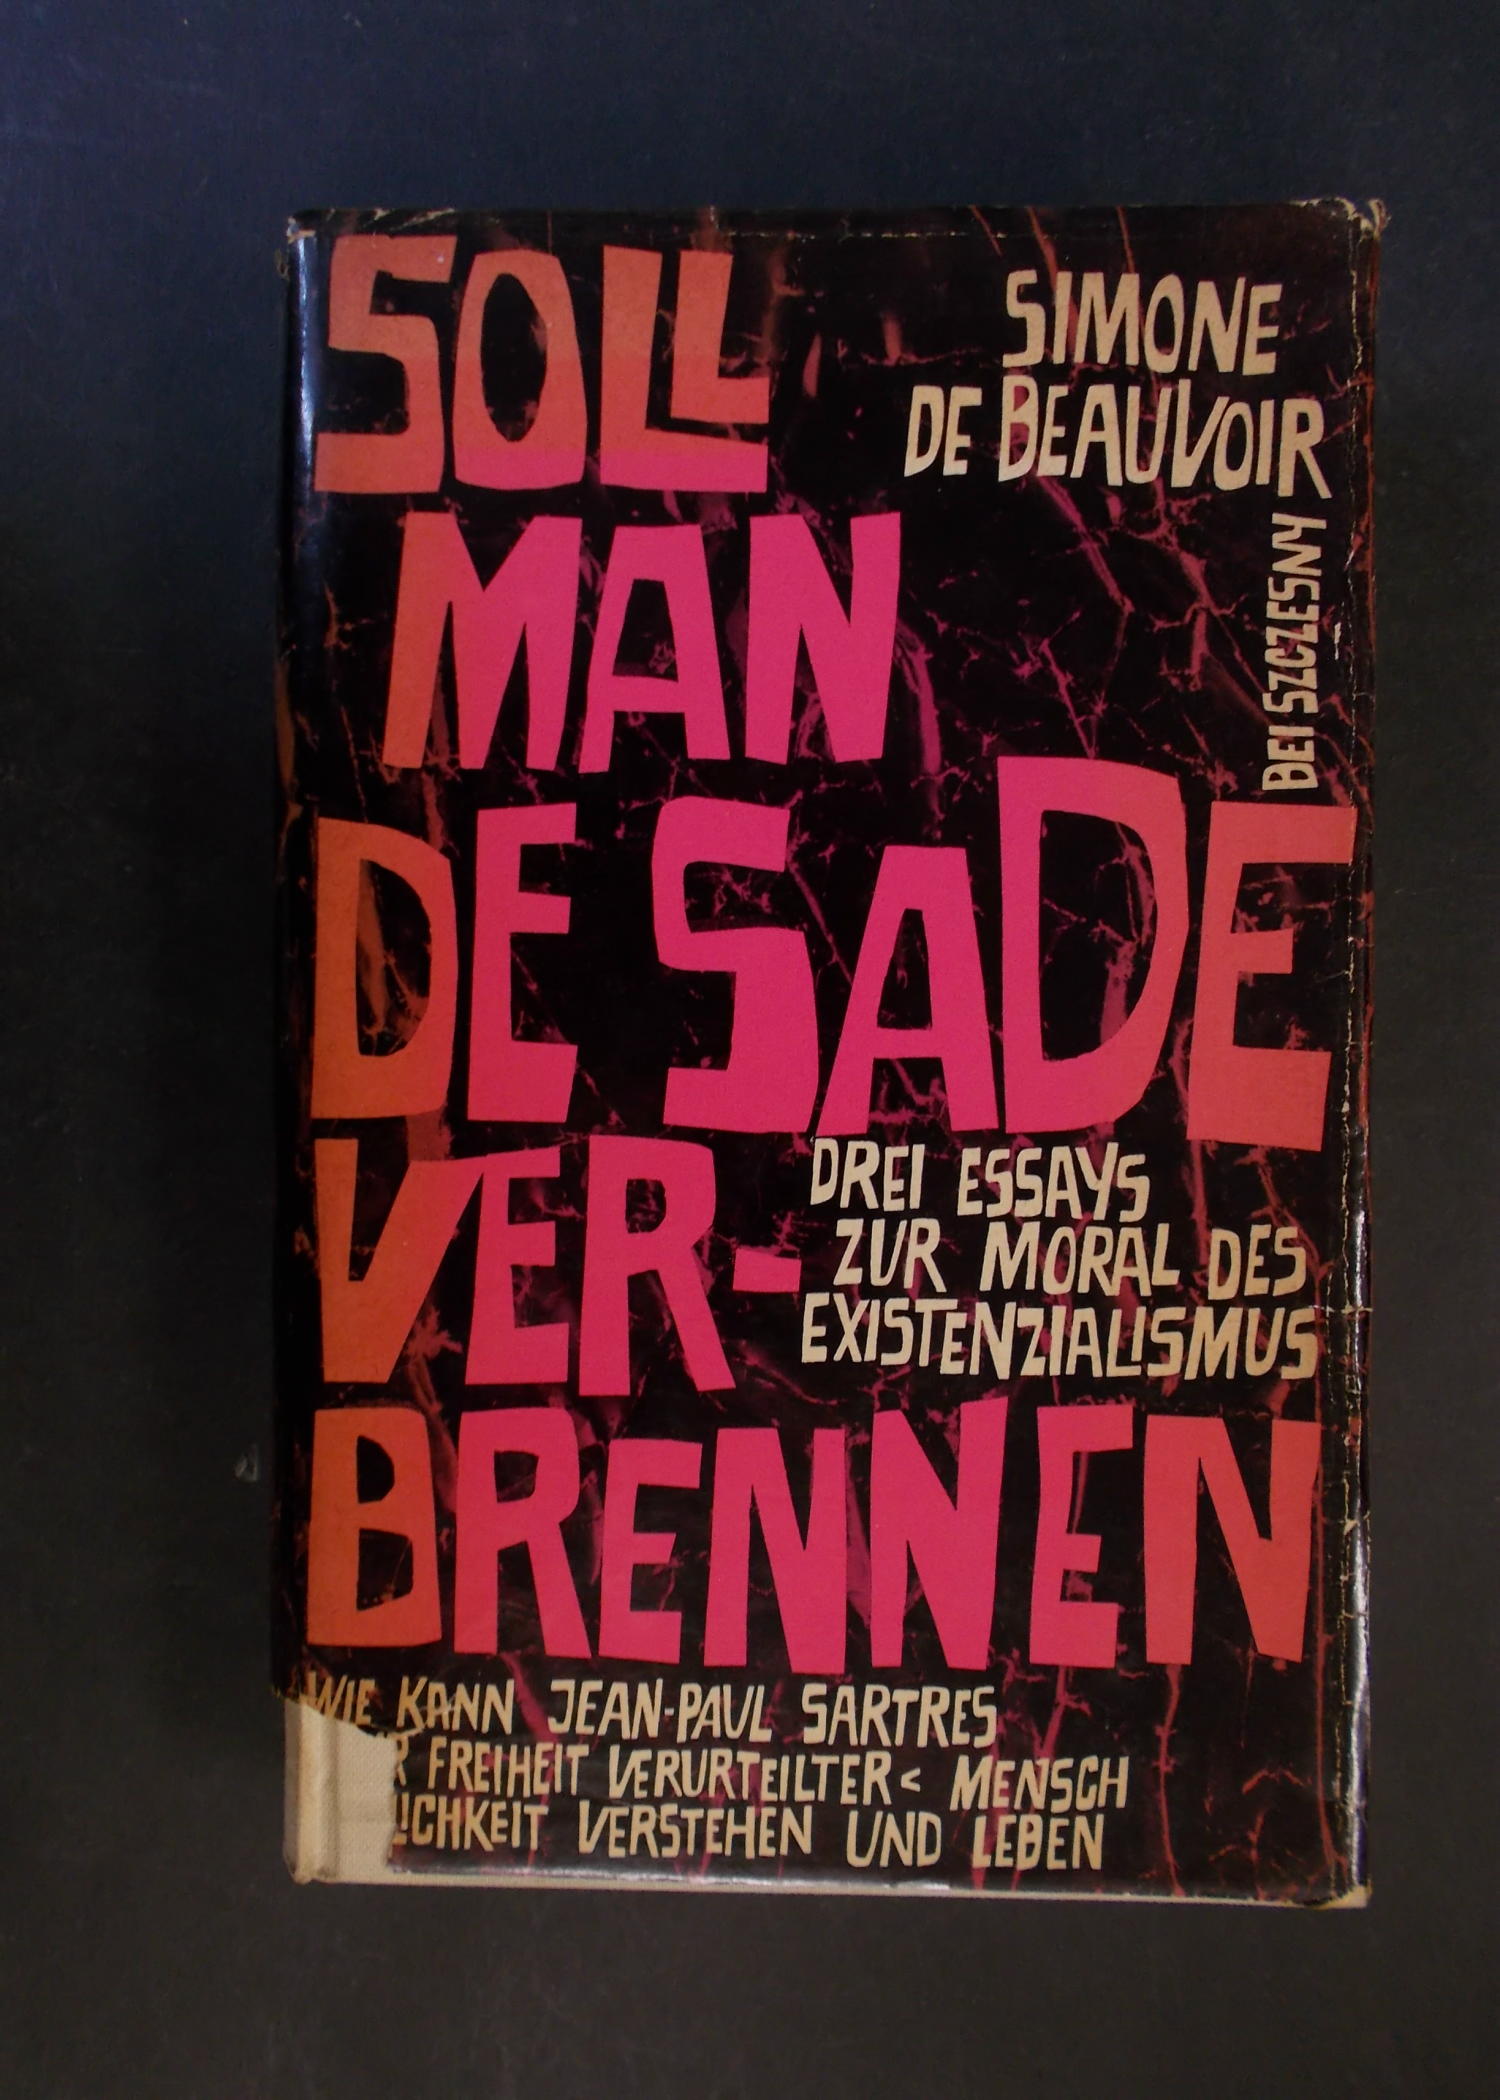 Soll man de Sade verbrennen - Drei Essays zur Moral des Existenzialismus - Simone de Beauvoir